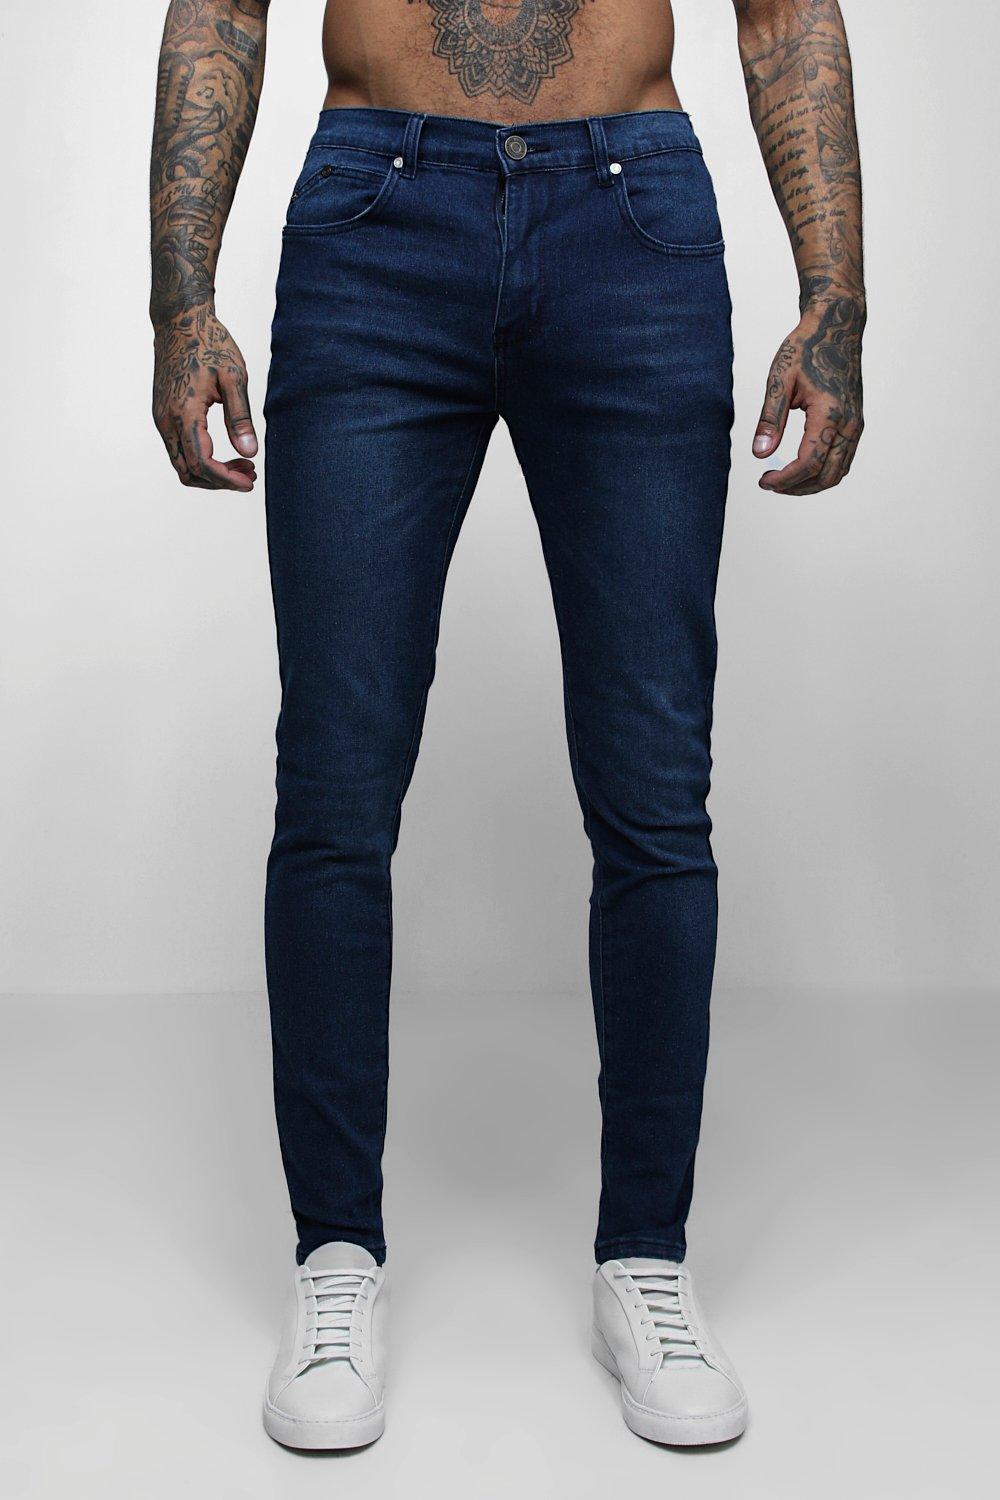 denim jeans dark blue